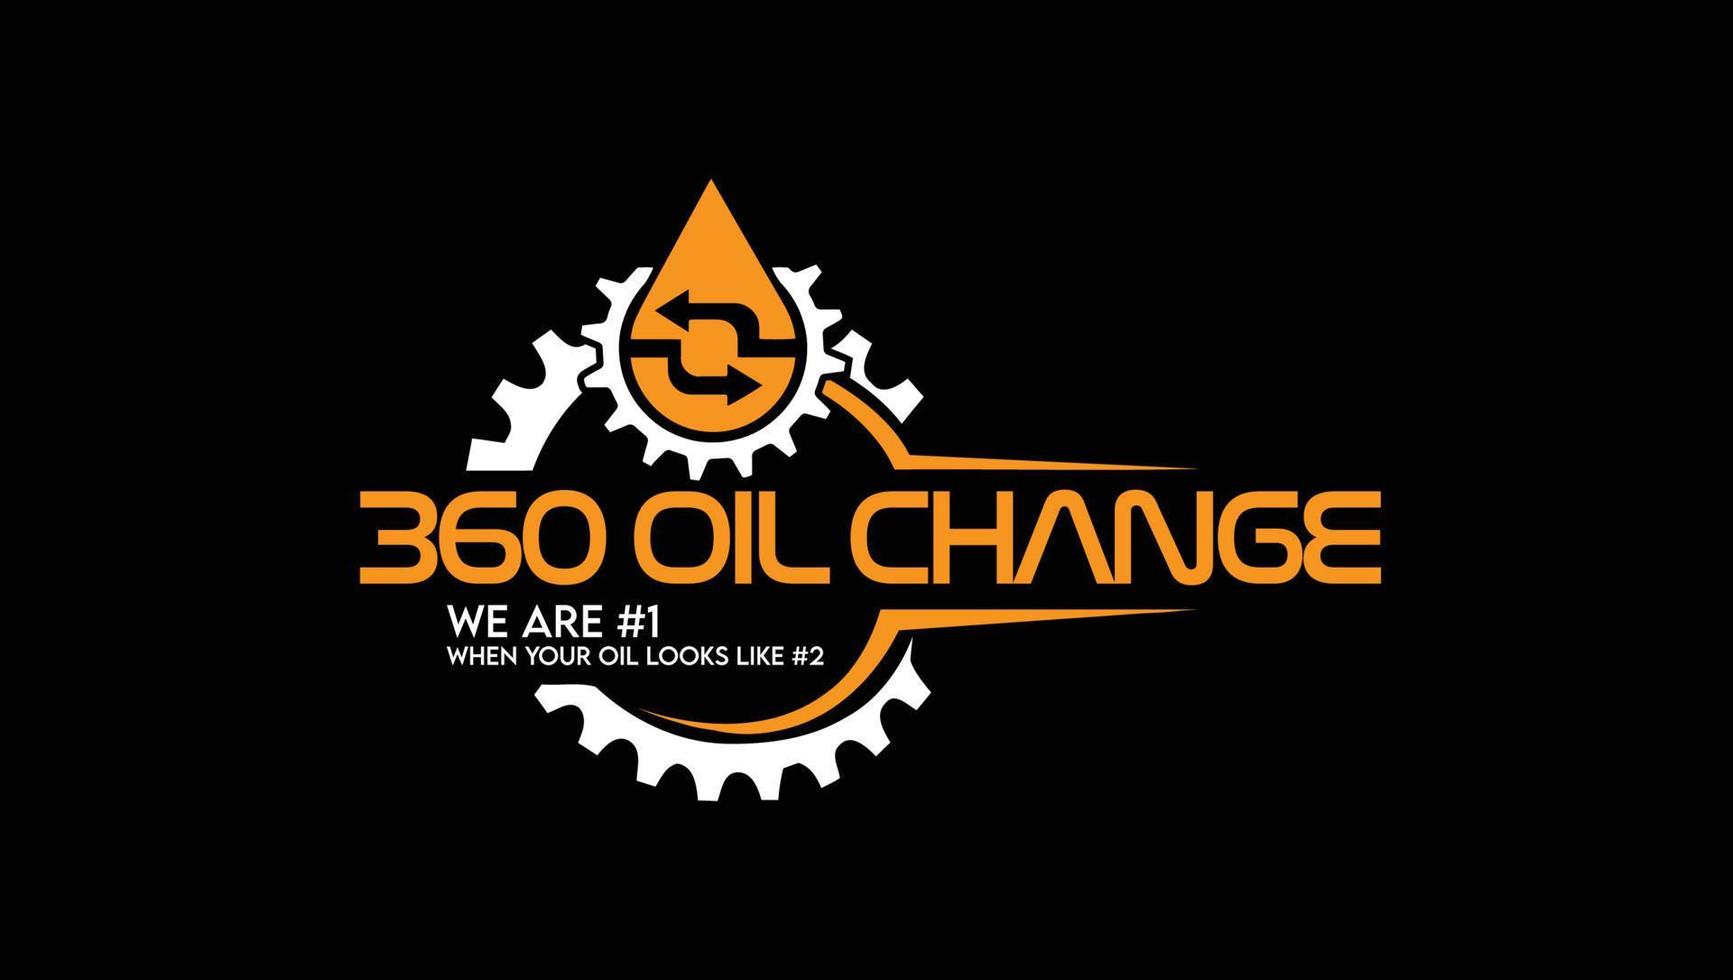 360 Oil change logo Images Free Vectors, Stock Photos vector